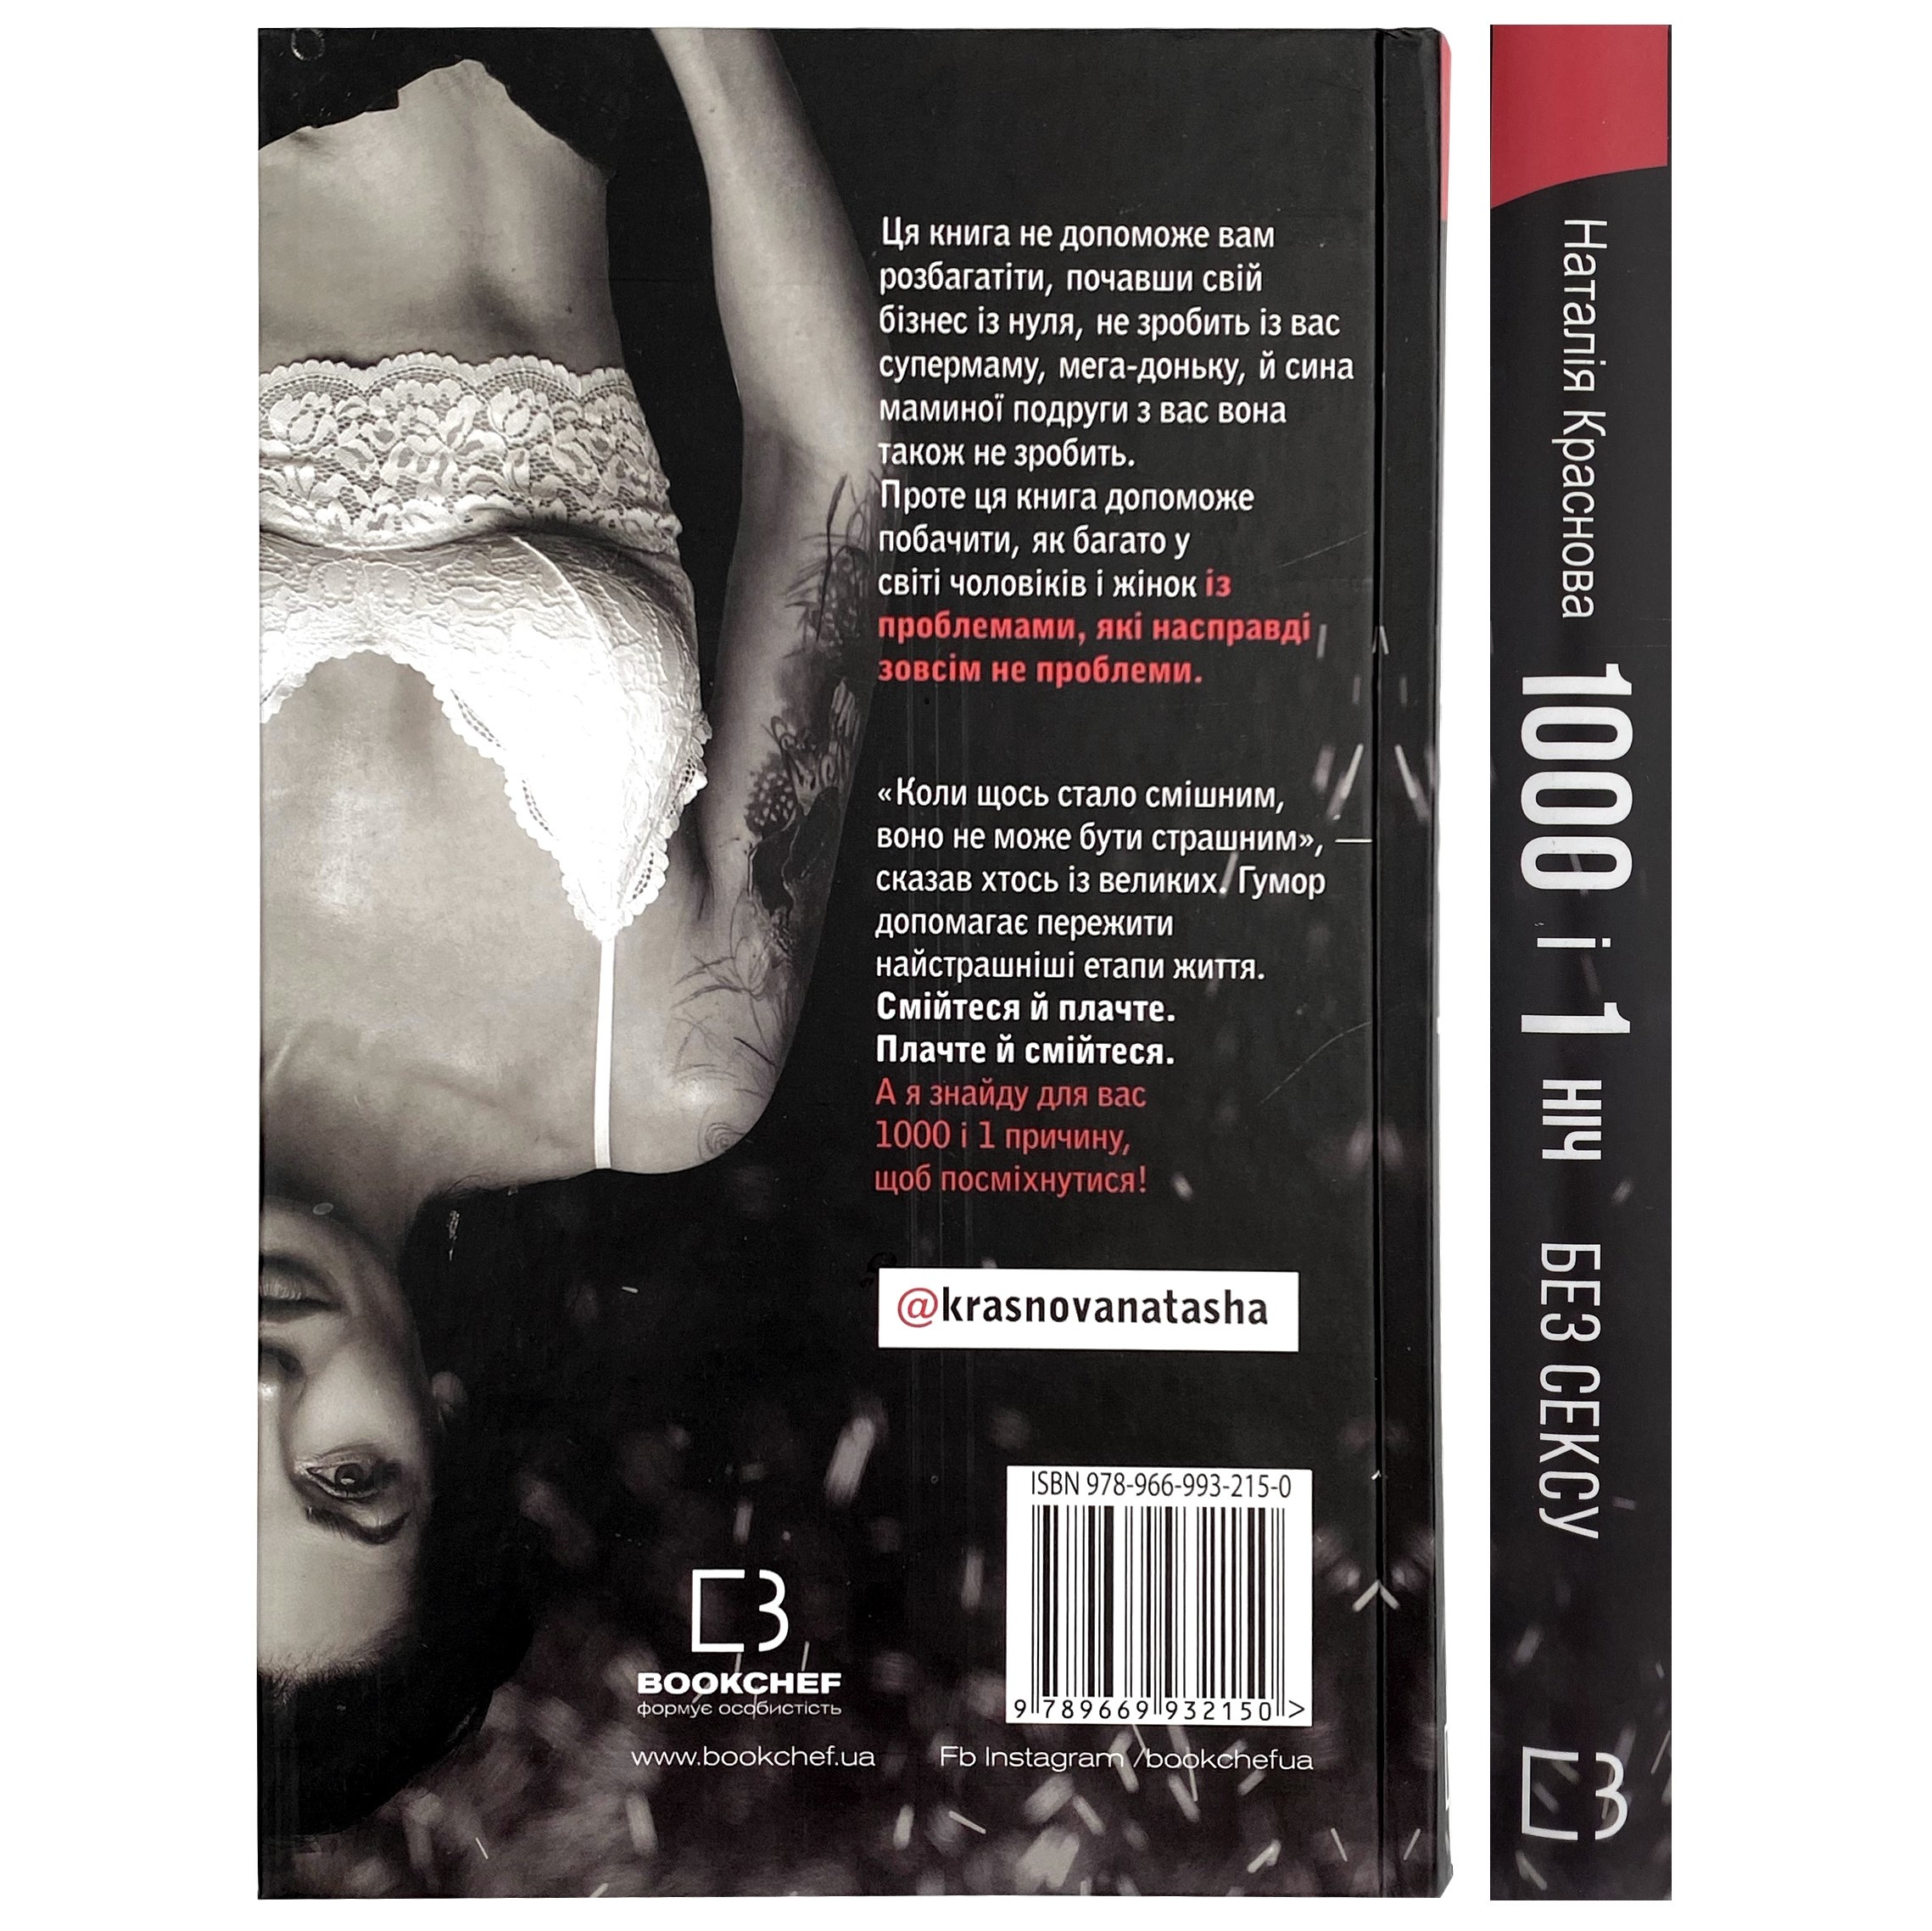 1000 і 1 ніч без сексу. Чорна книга. Автор — Наталья Краснова. 